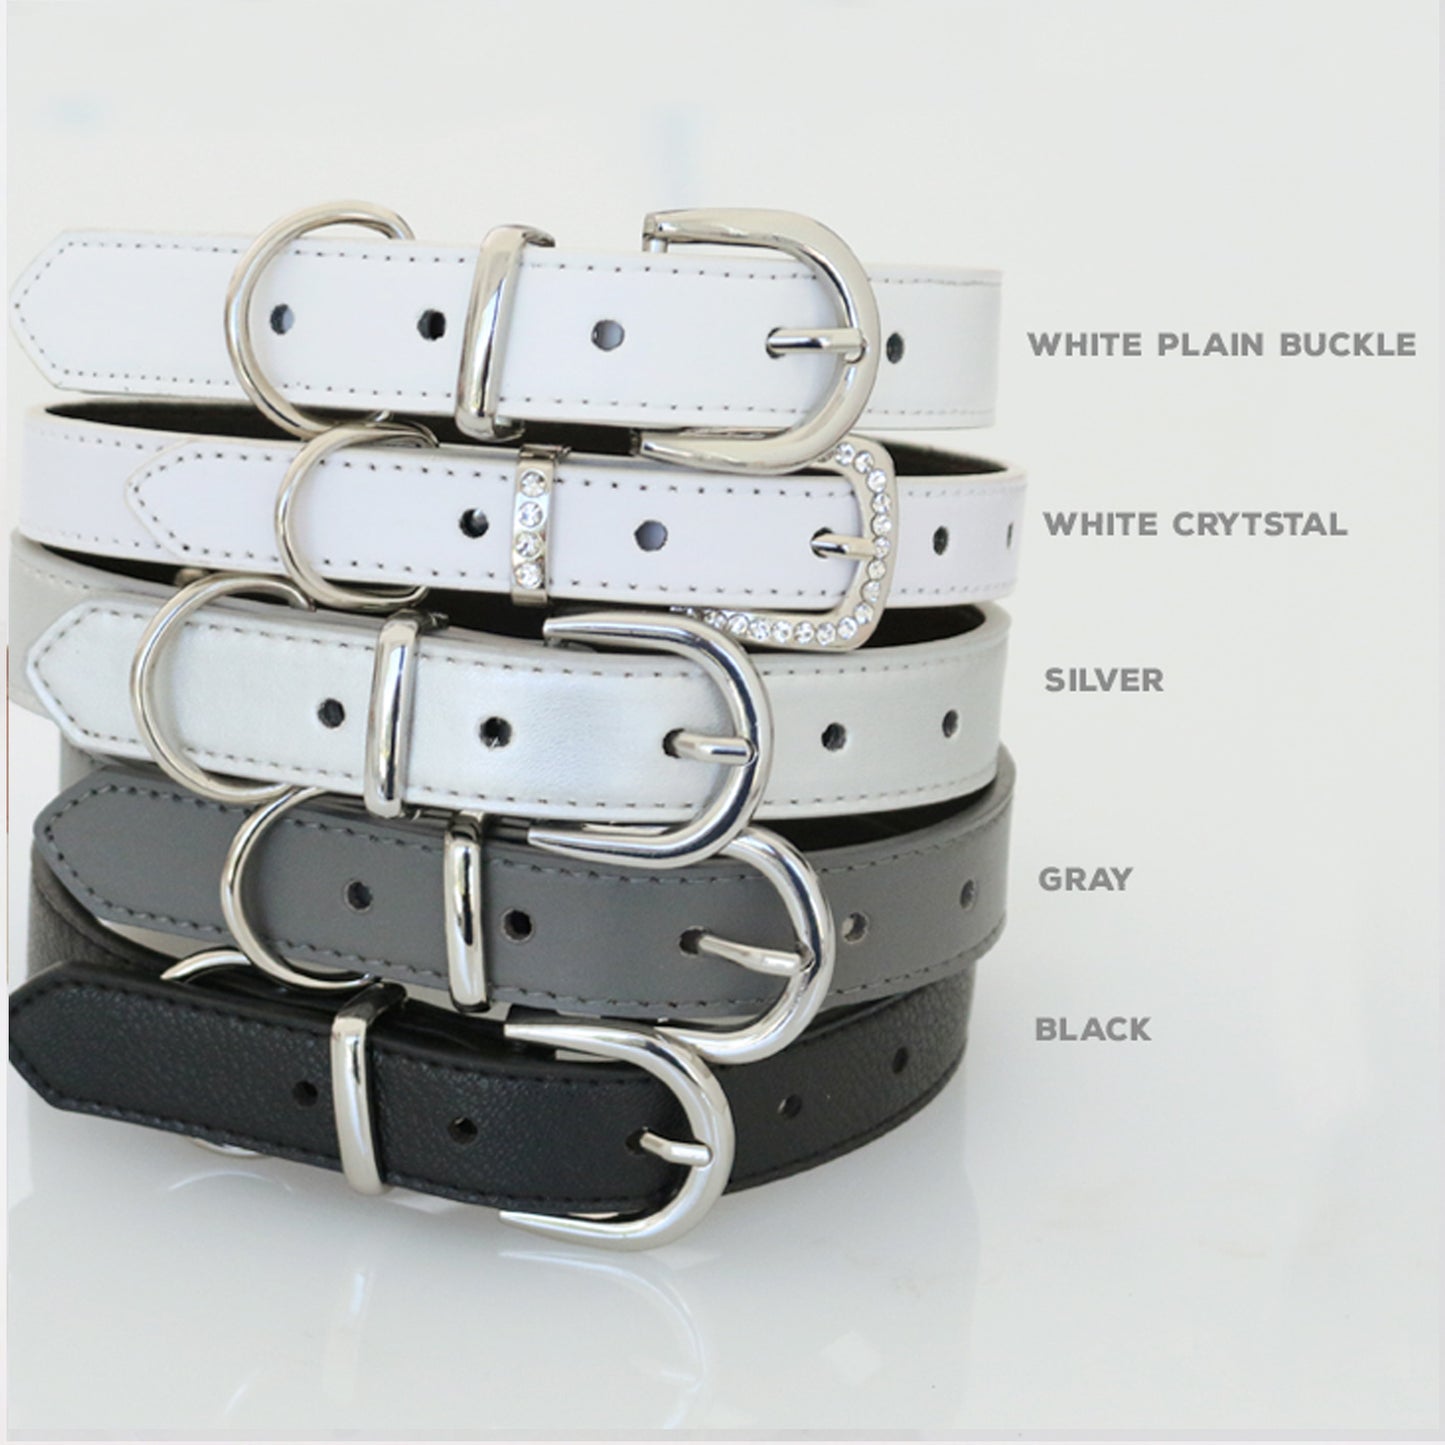 White Ring Bearer Dog Collar and Leash